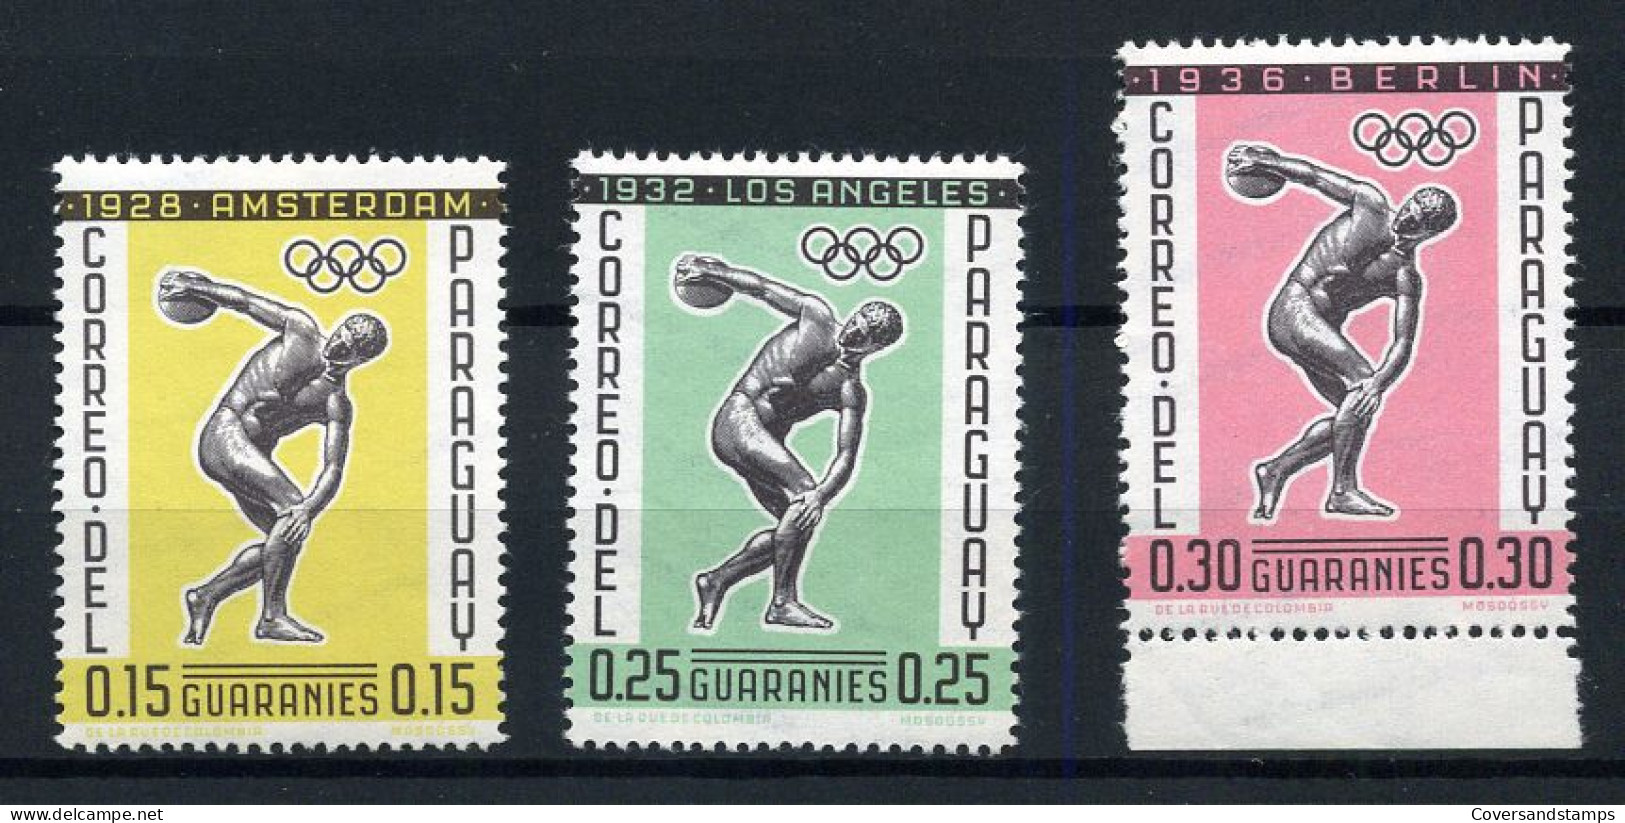 Paraguay - Olympic Games Berlin 1936 - Summer 1936: Berlin